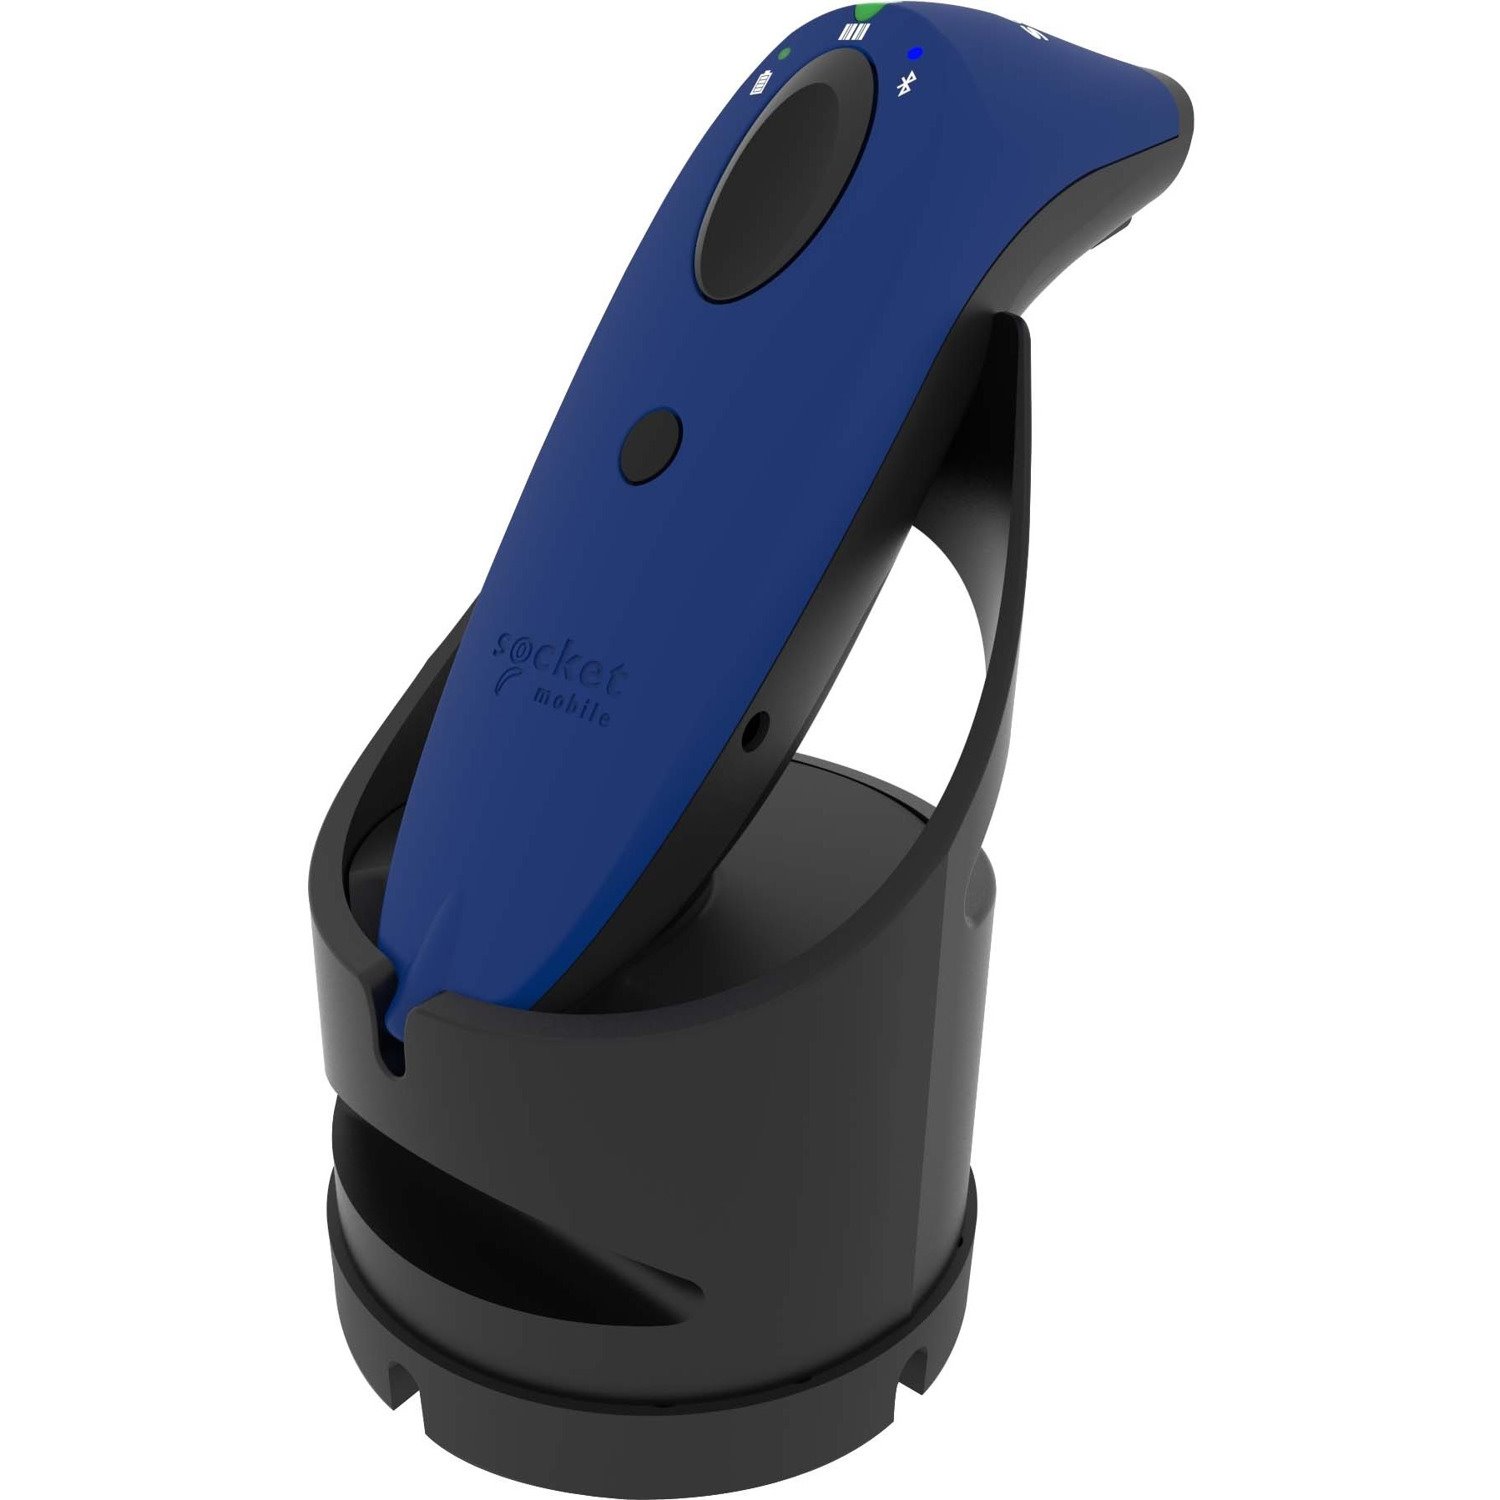 Socket Mobile SocketScan S730 Handheld Barcode Scanner - Wireless Connectivity - Blue, Black